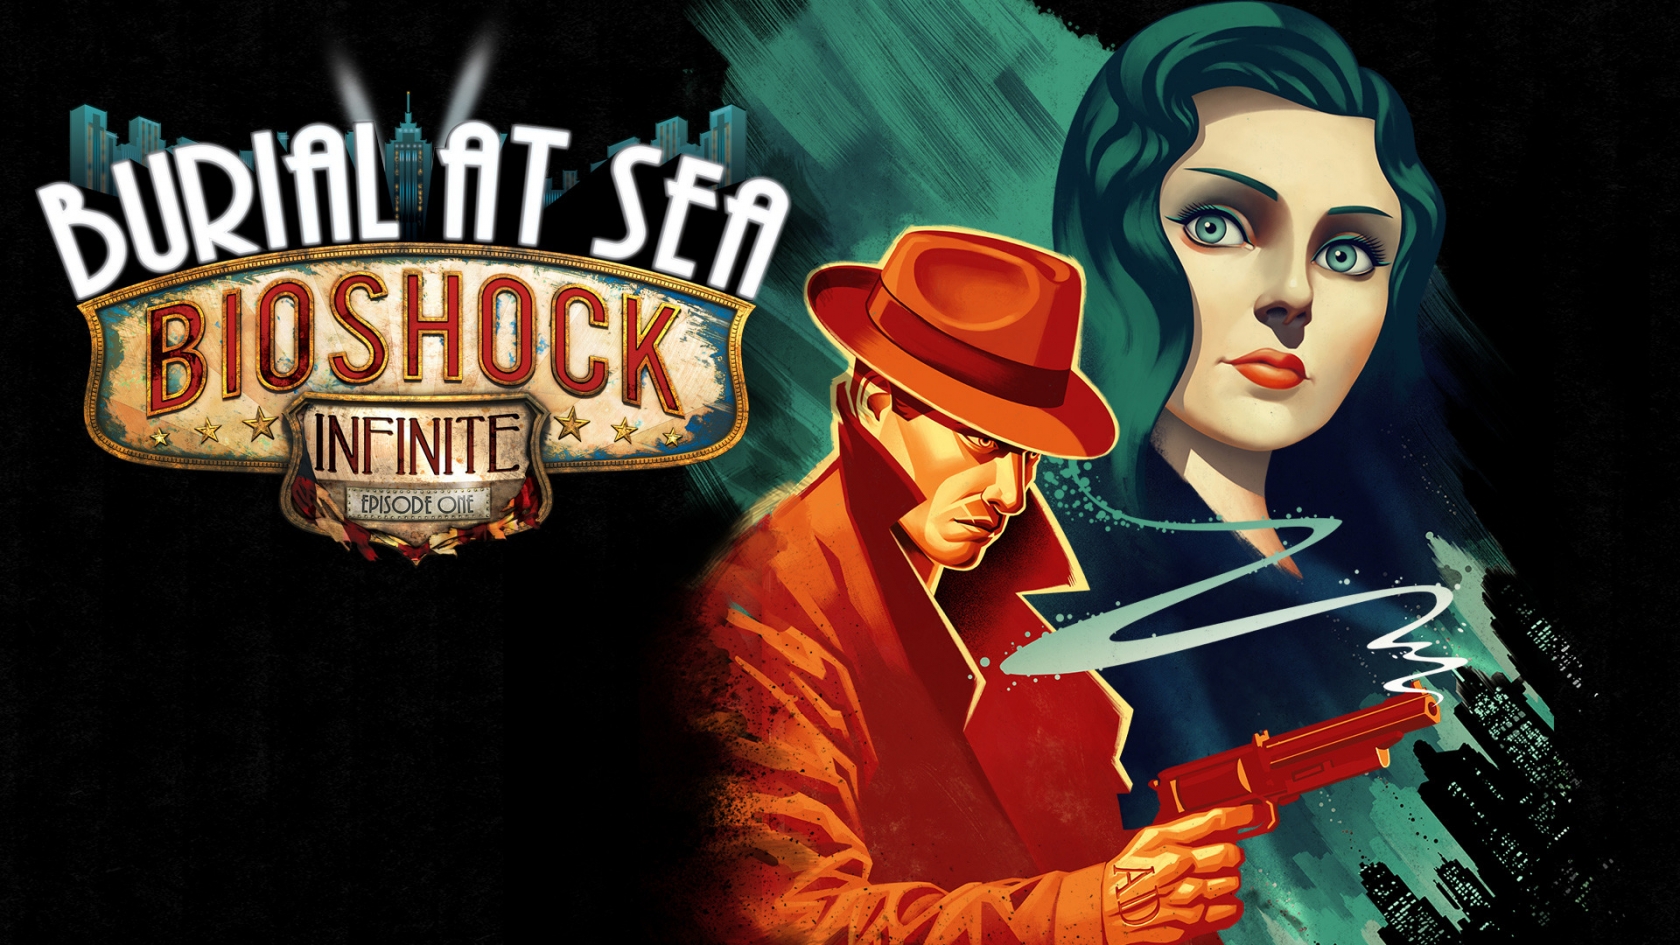 BioShock Infinite Video Game for 1680 x 945 HDTV resolution